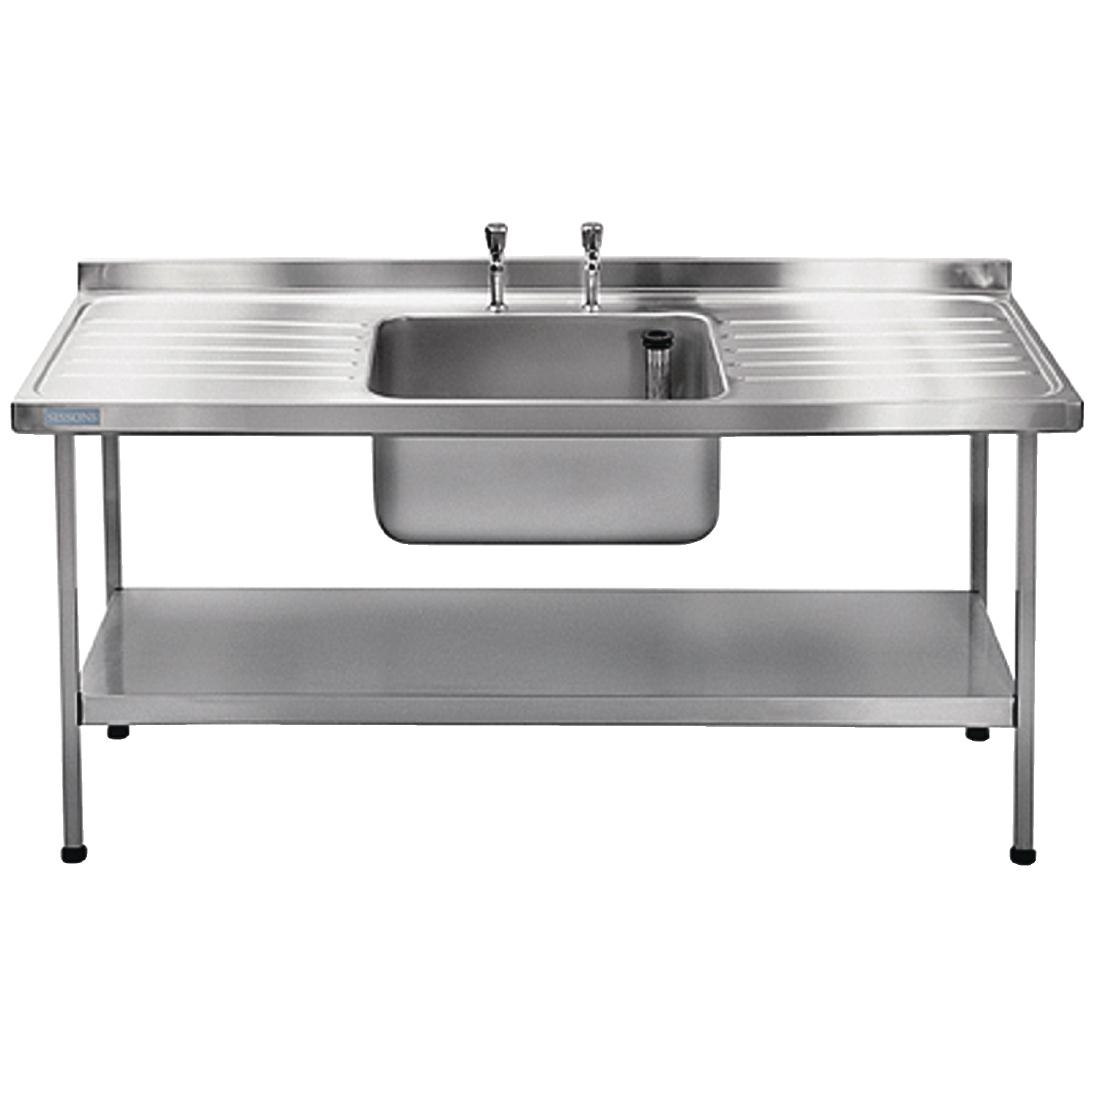 Franke Sissons Stainless Steel Sink Centre Bowl 1800x650mm